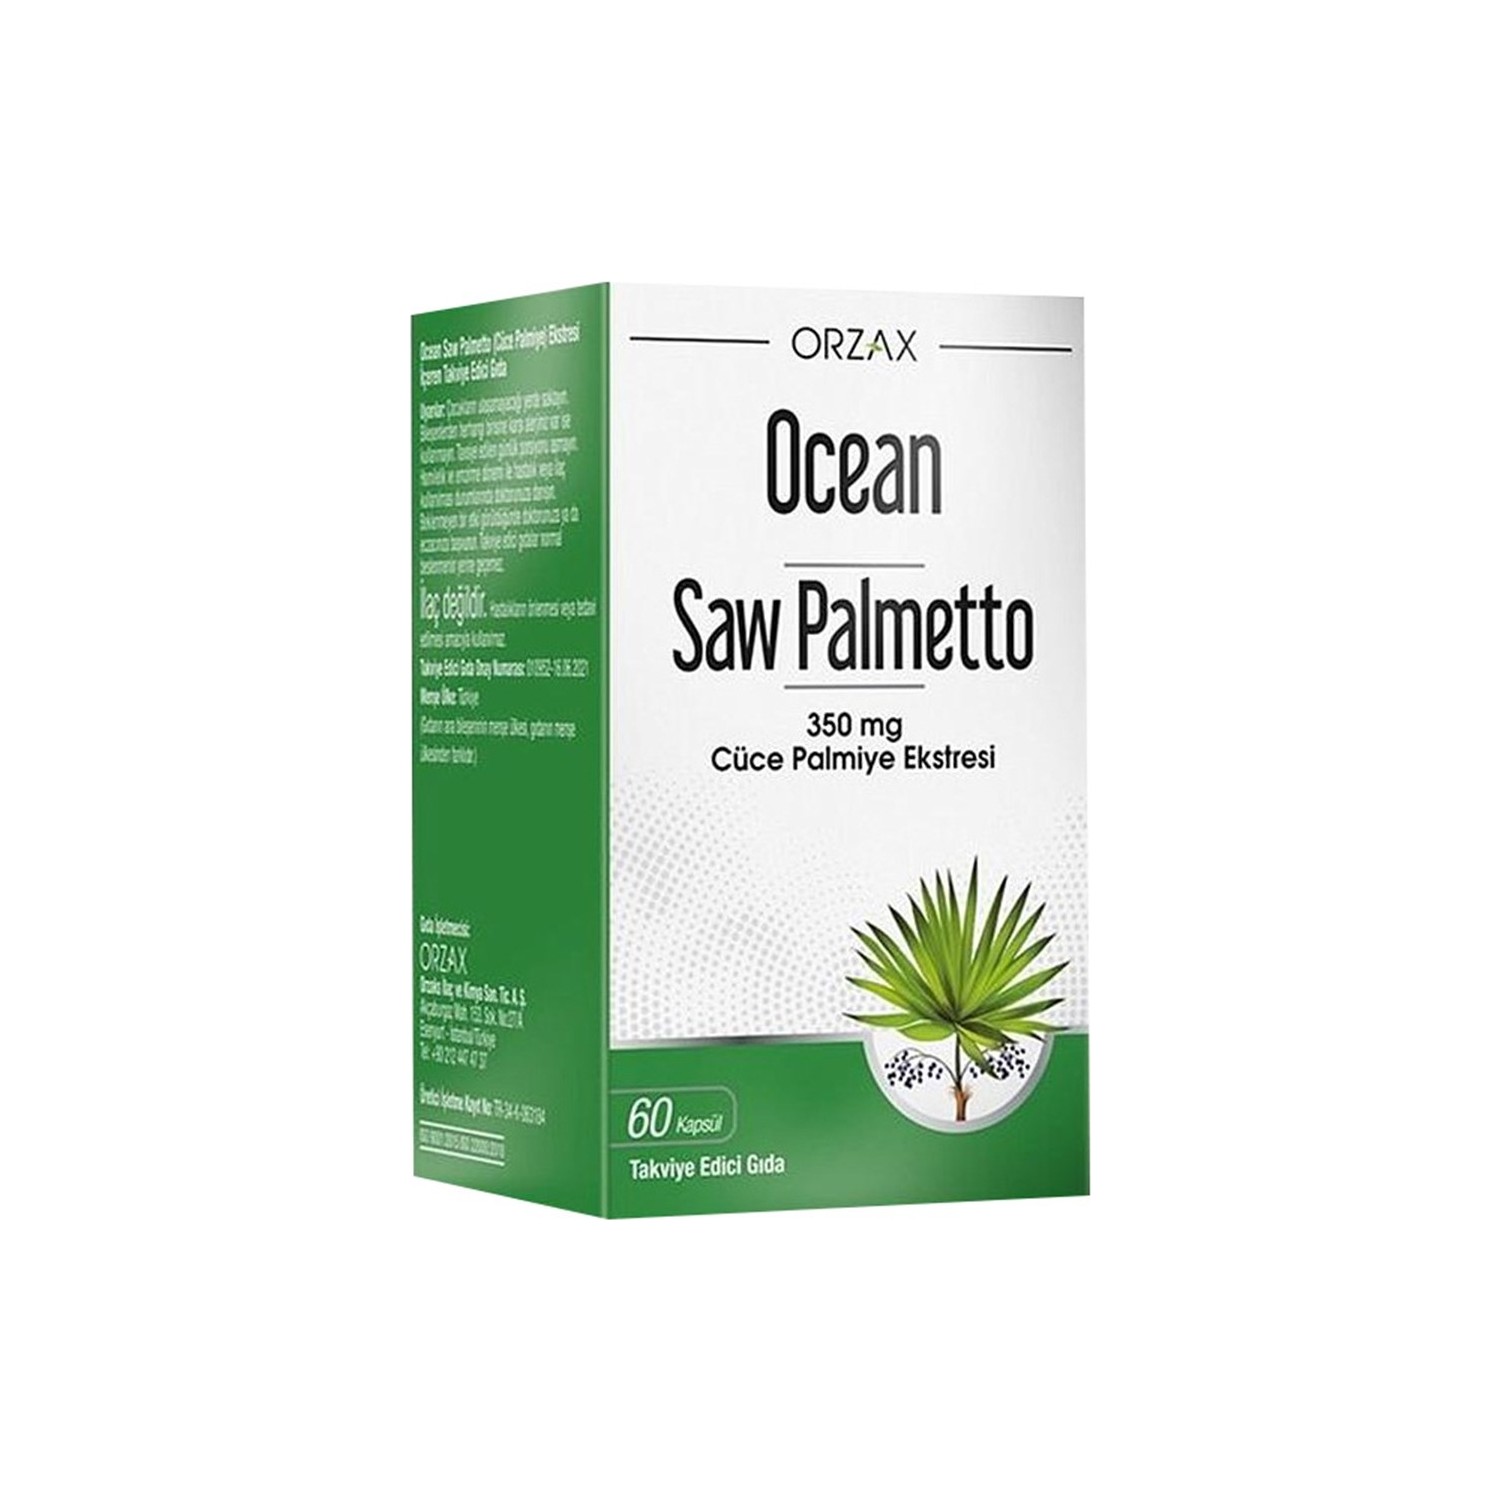 Пищевая добавка Ocean Saw Palmetto, 60 капсул irwin naturals healthy flow saw palmetto 60 liquid soft gels